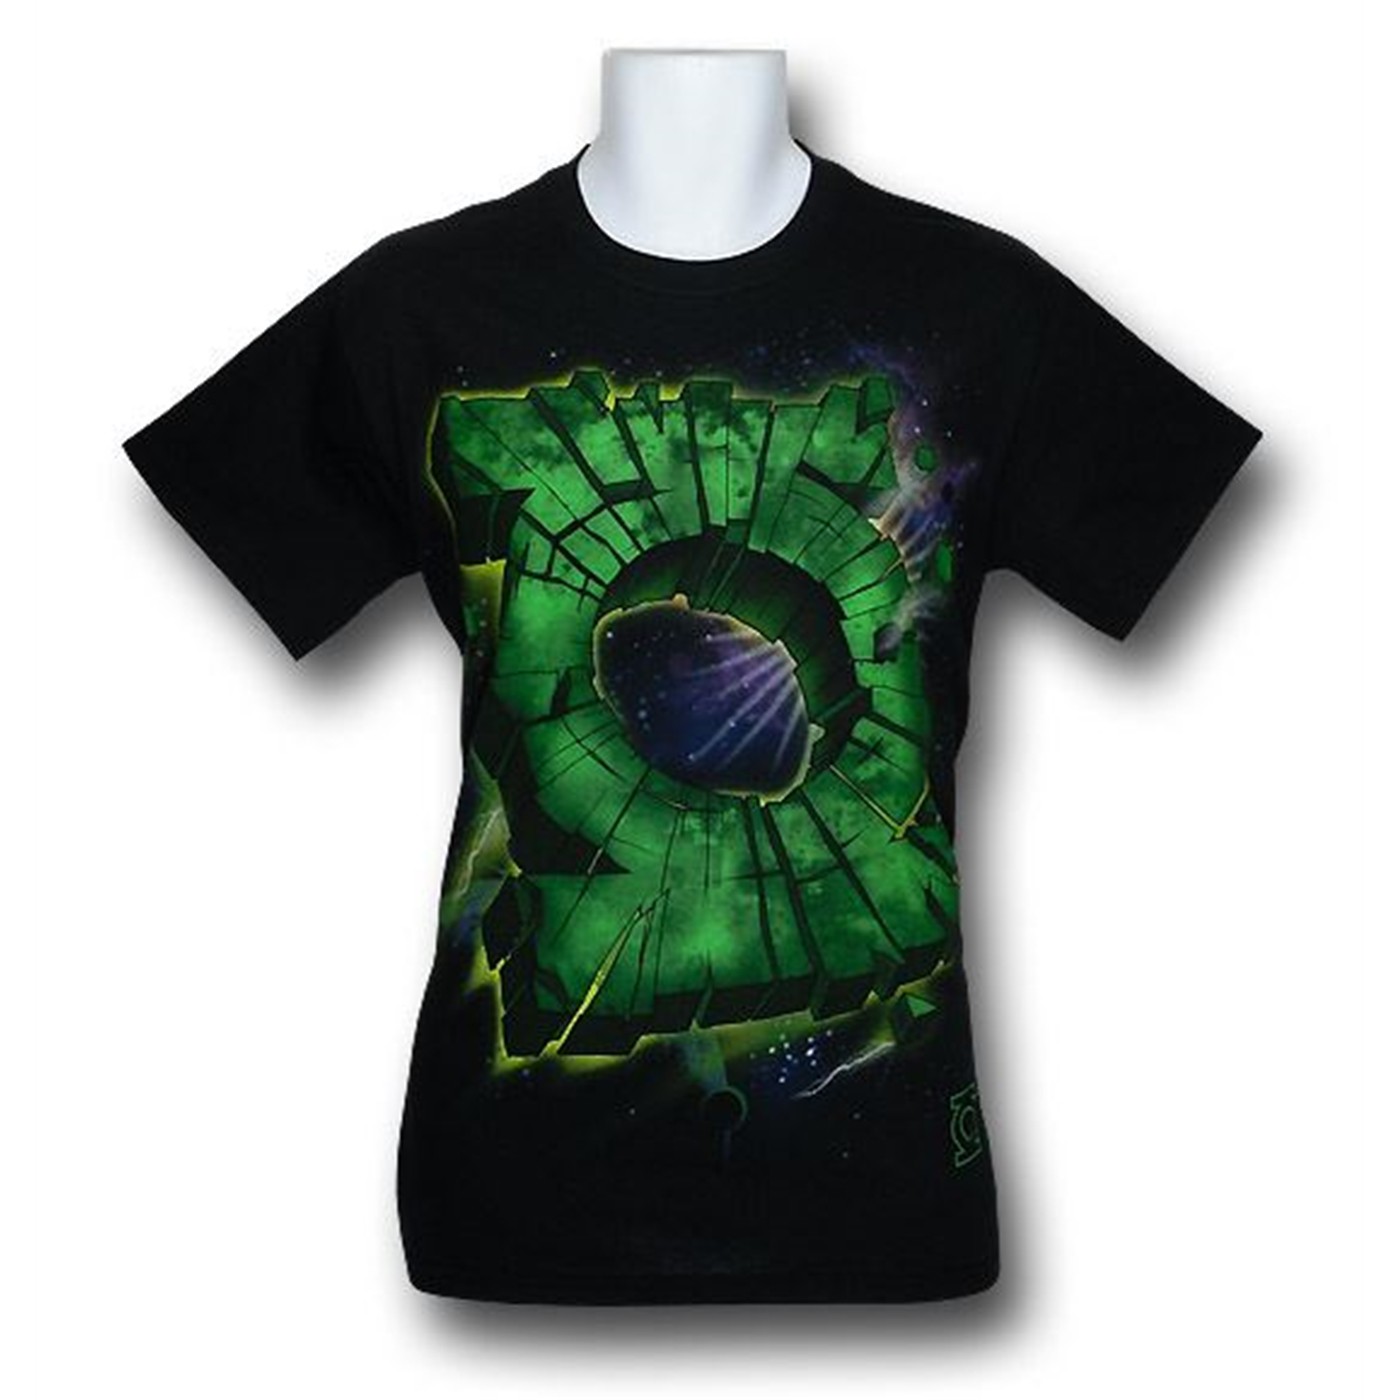 Green Lantern Shattered Symbol T-Shirt